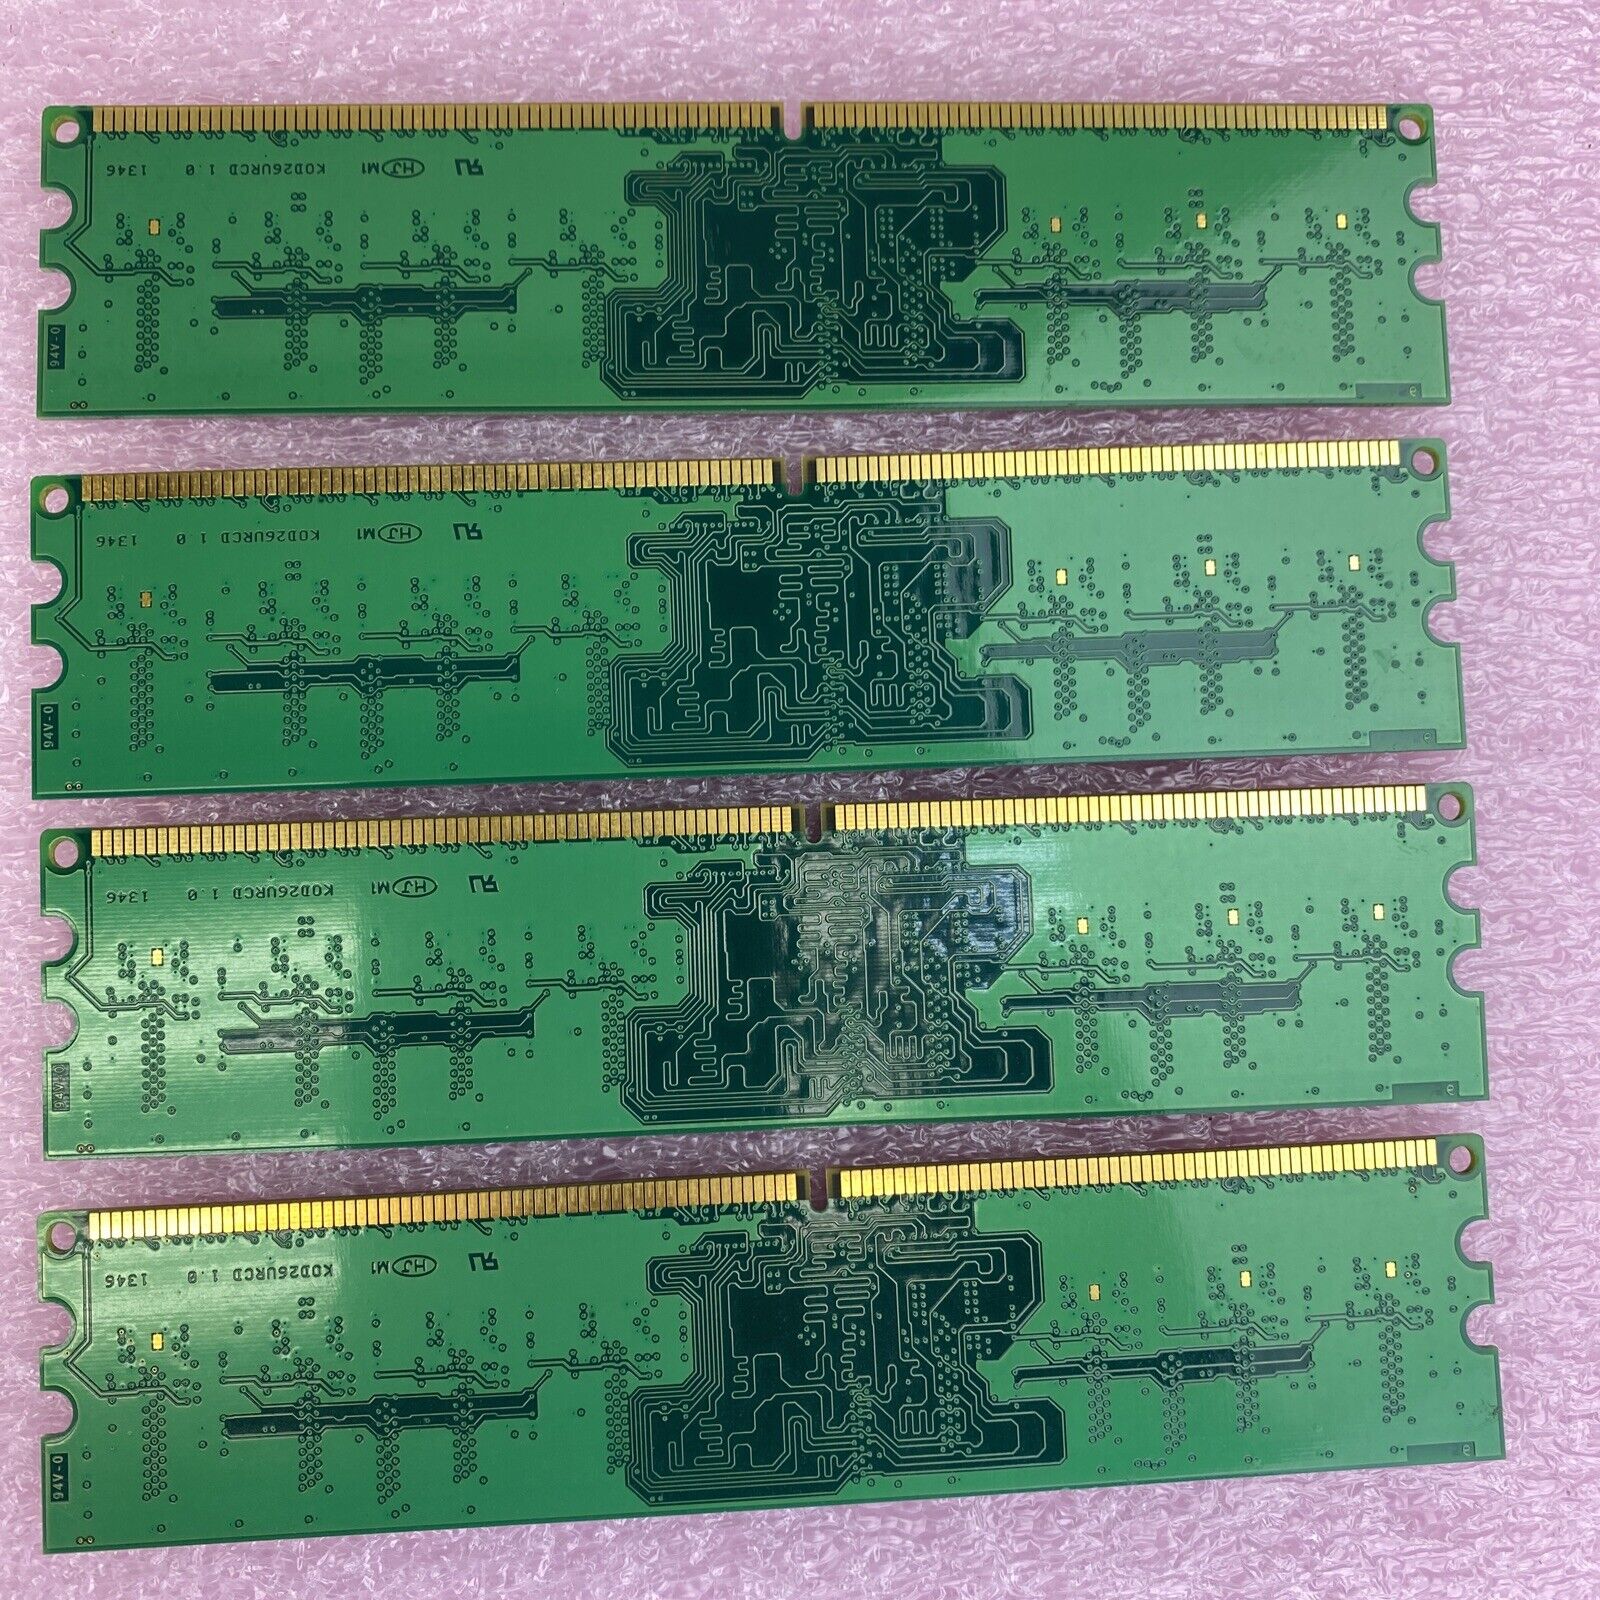 4x 1GB Crucial CT12864AA667.M8FM 240-PIN DIMM 128Mx64 DDR2 desktop memory RAM